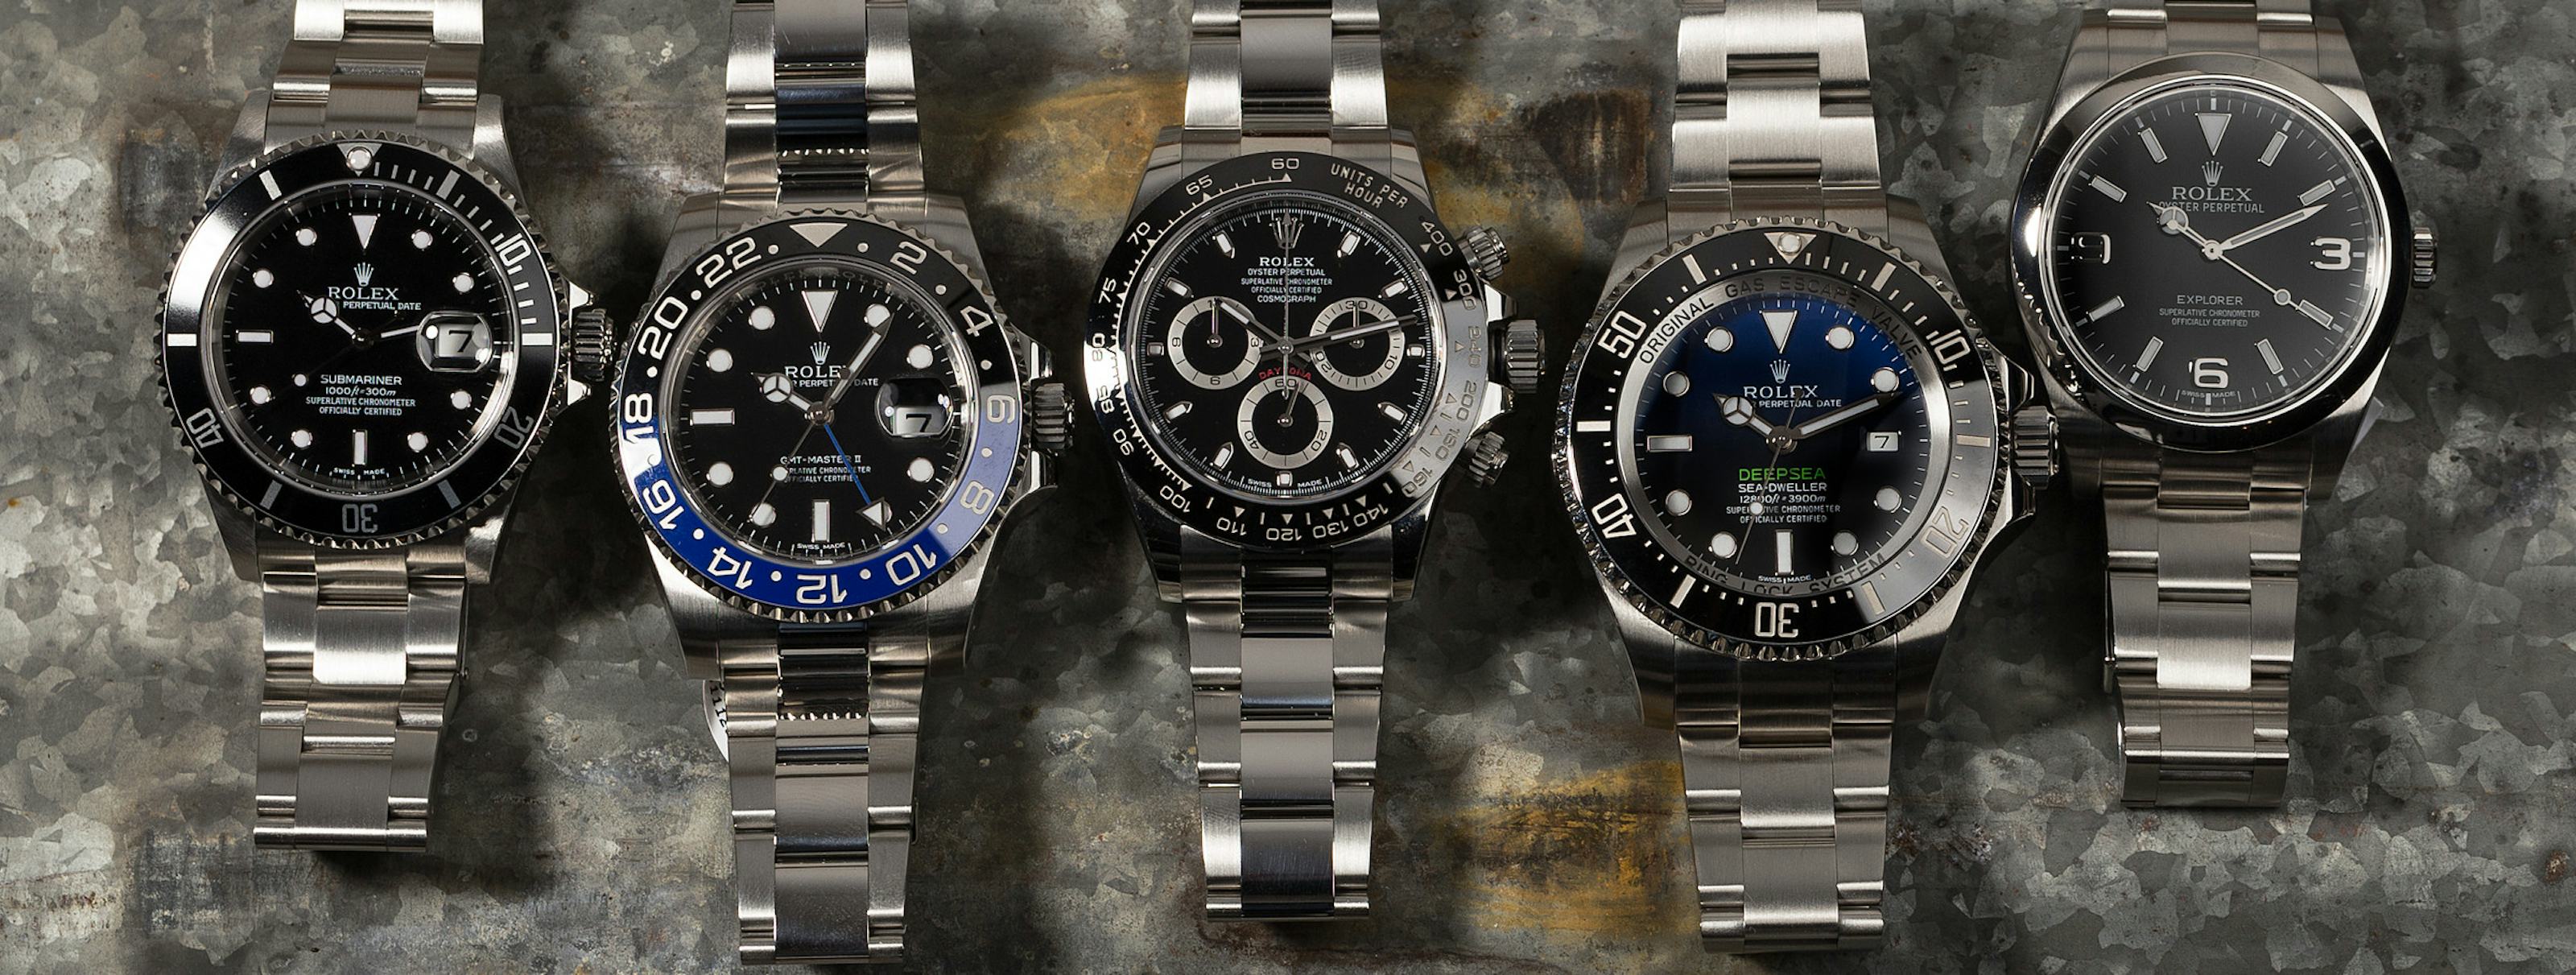 10 Simple Ways To Spot A Fake Rolex Watch | Watchbox